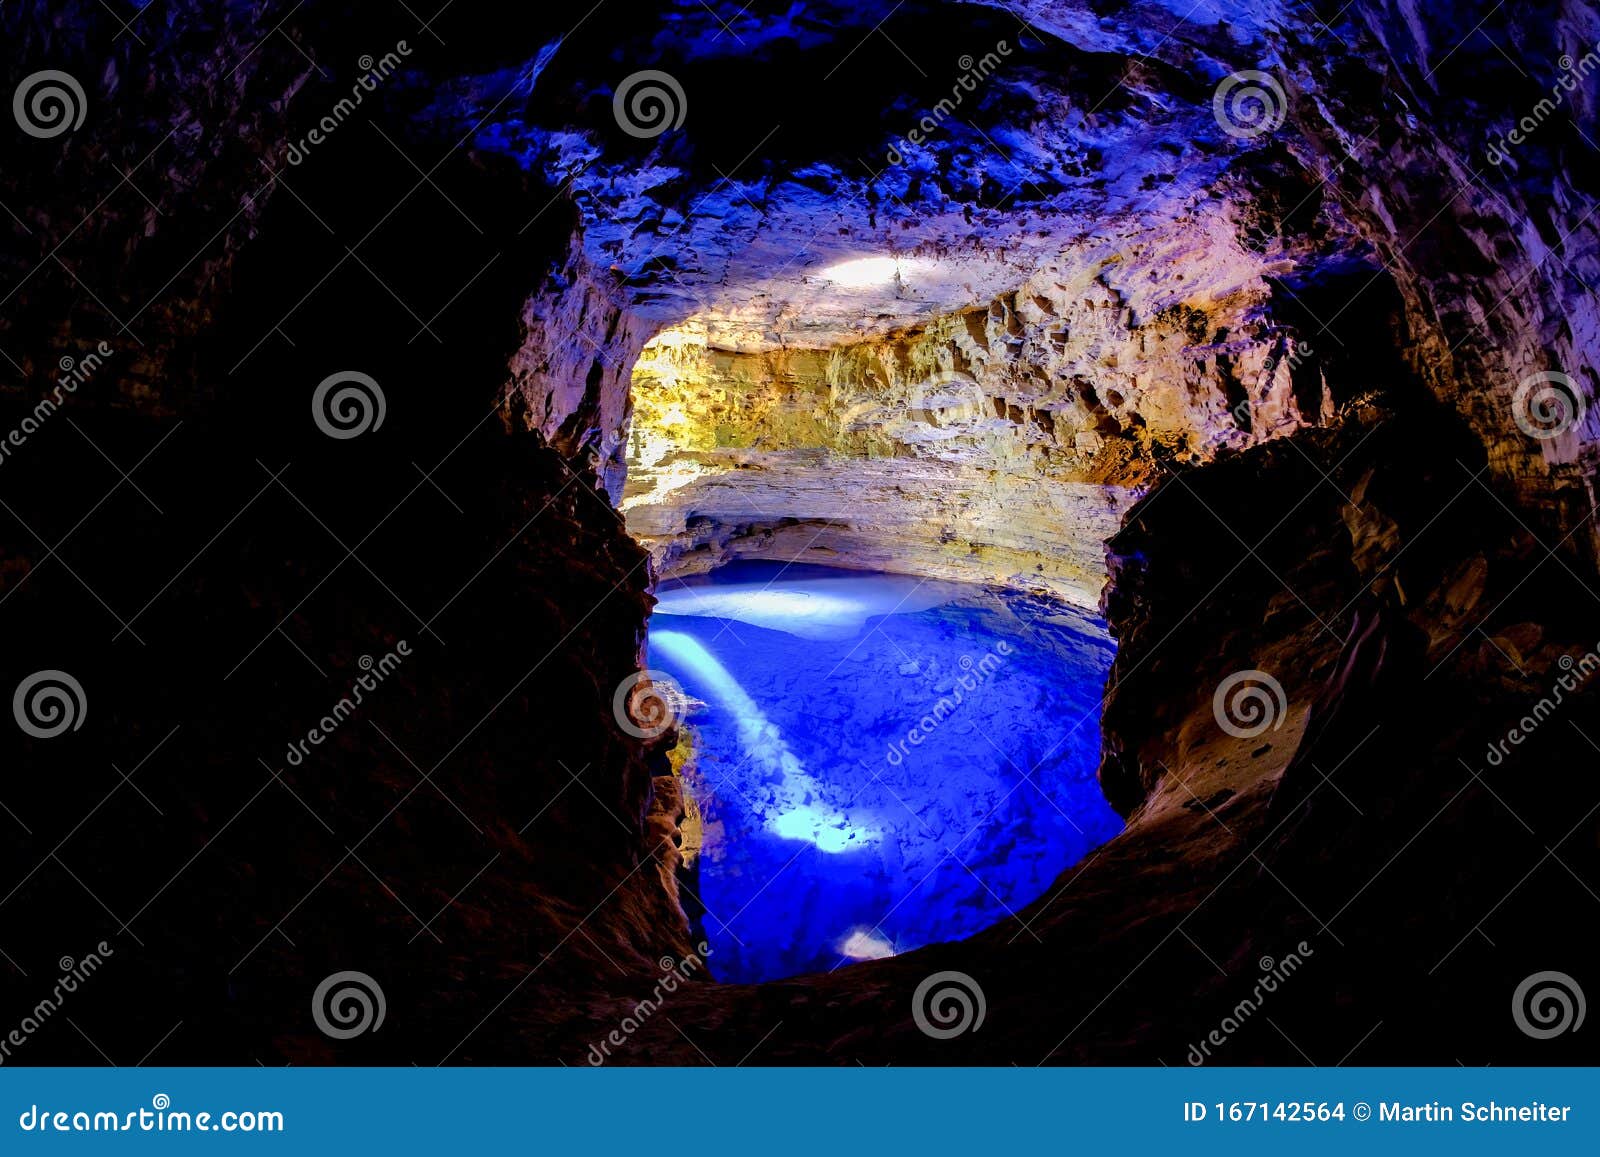 poco encantado, blue lagoon with sunrays inside a cavern in the chapada diamantina, andarai, bahia, brazil